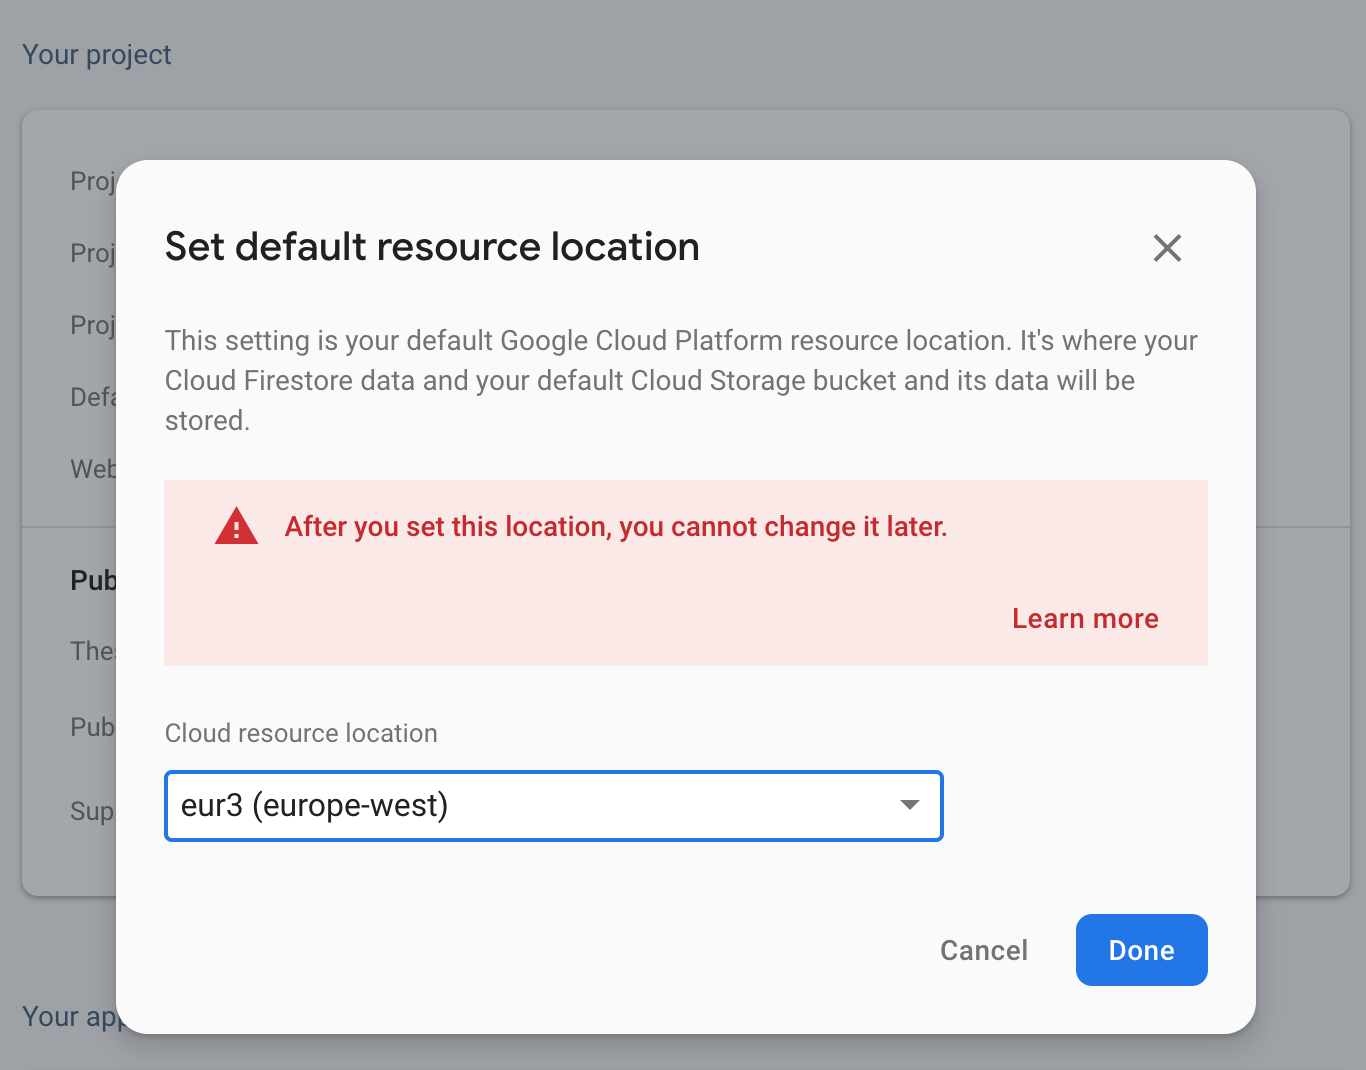 Set the default resource location